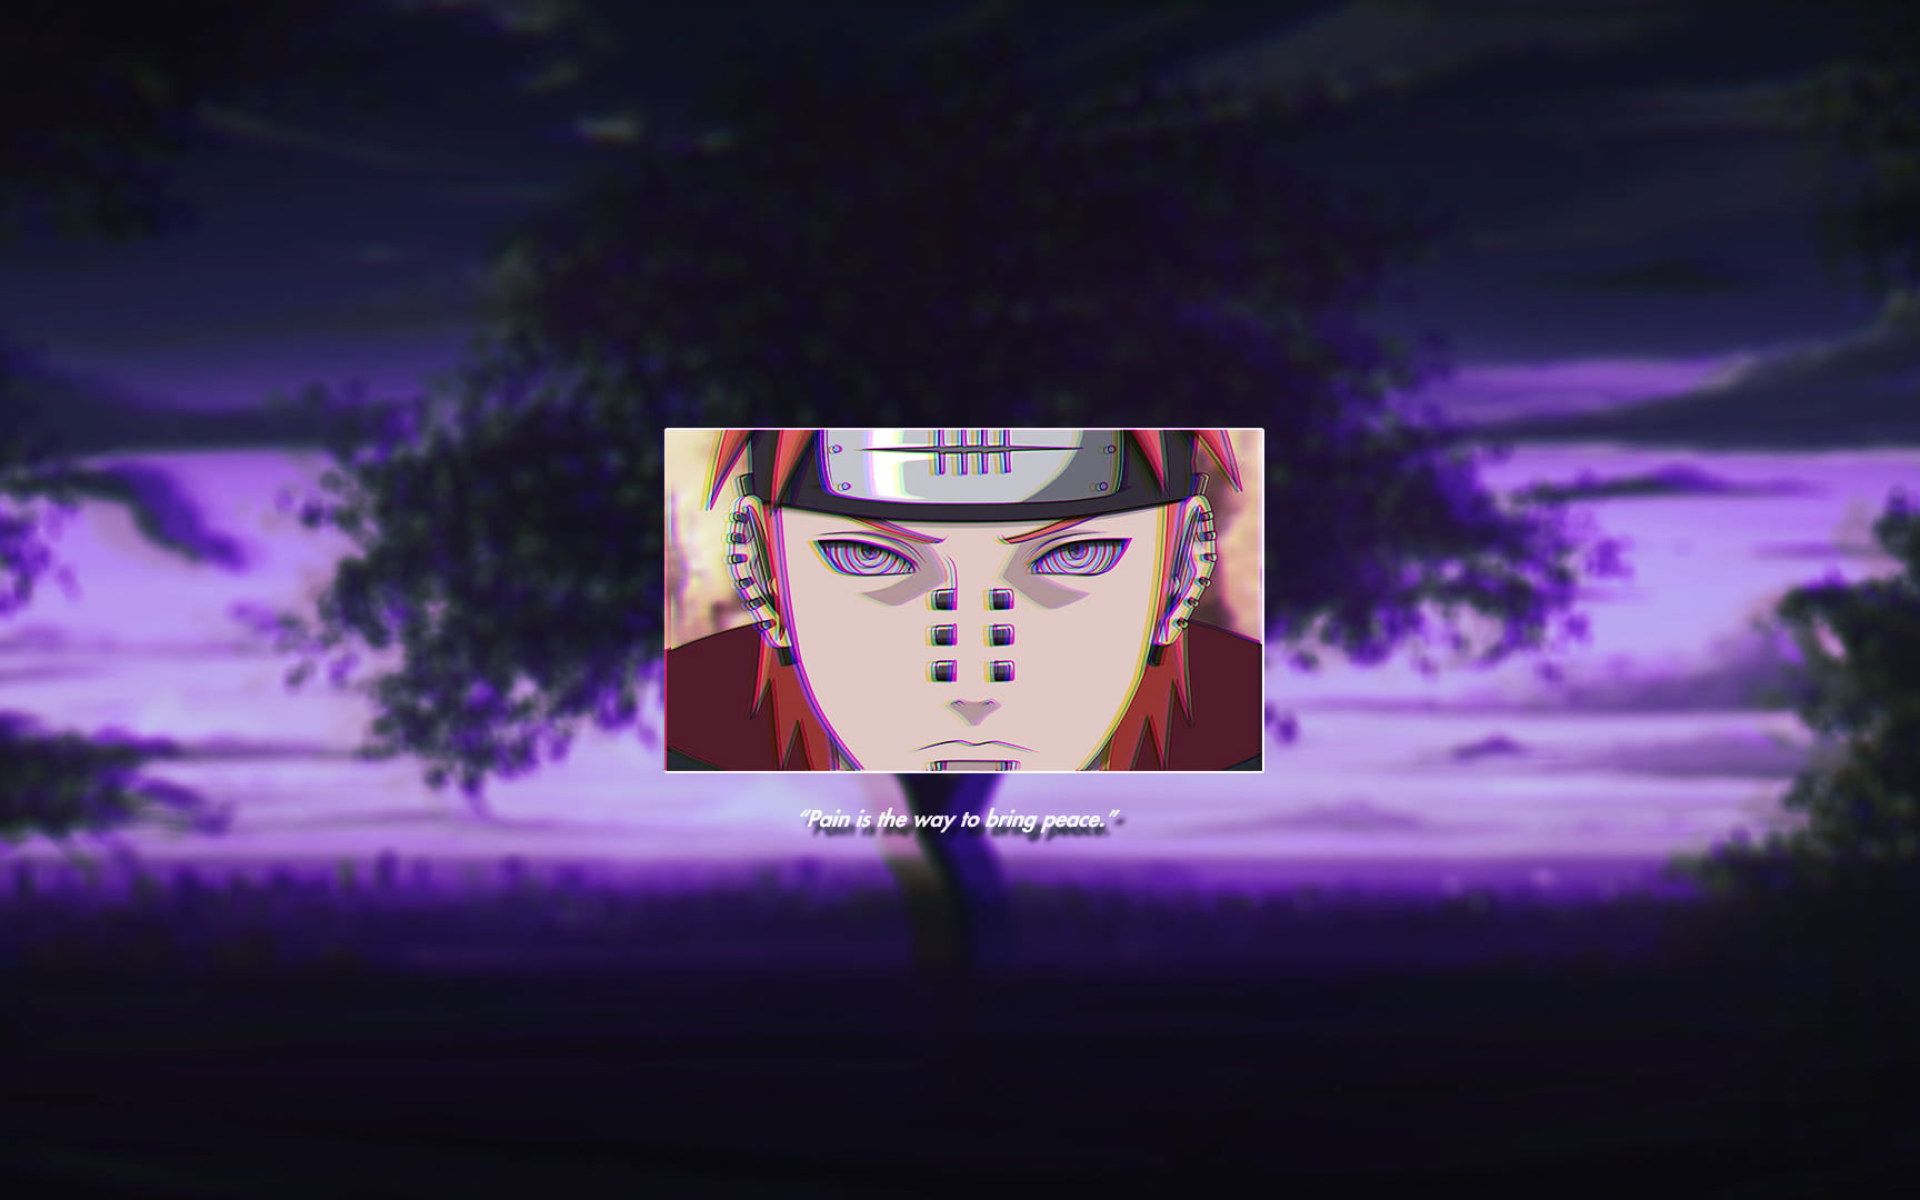 Naruto (anime) wallpaper, purple .wallpaperforu.com